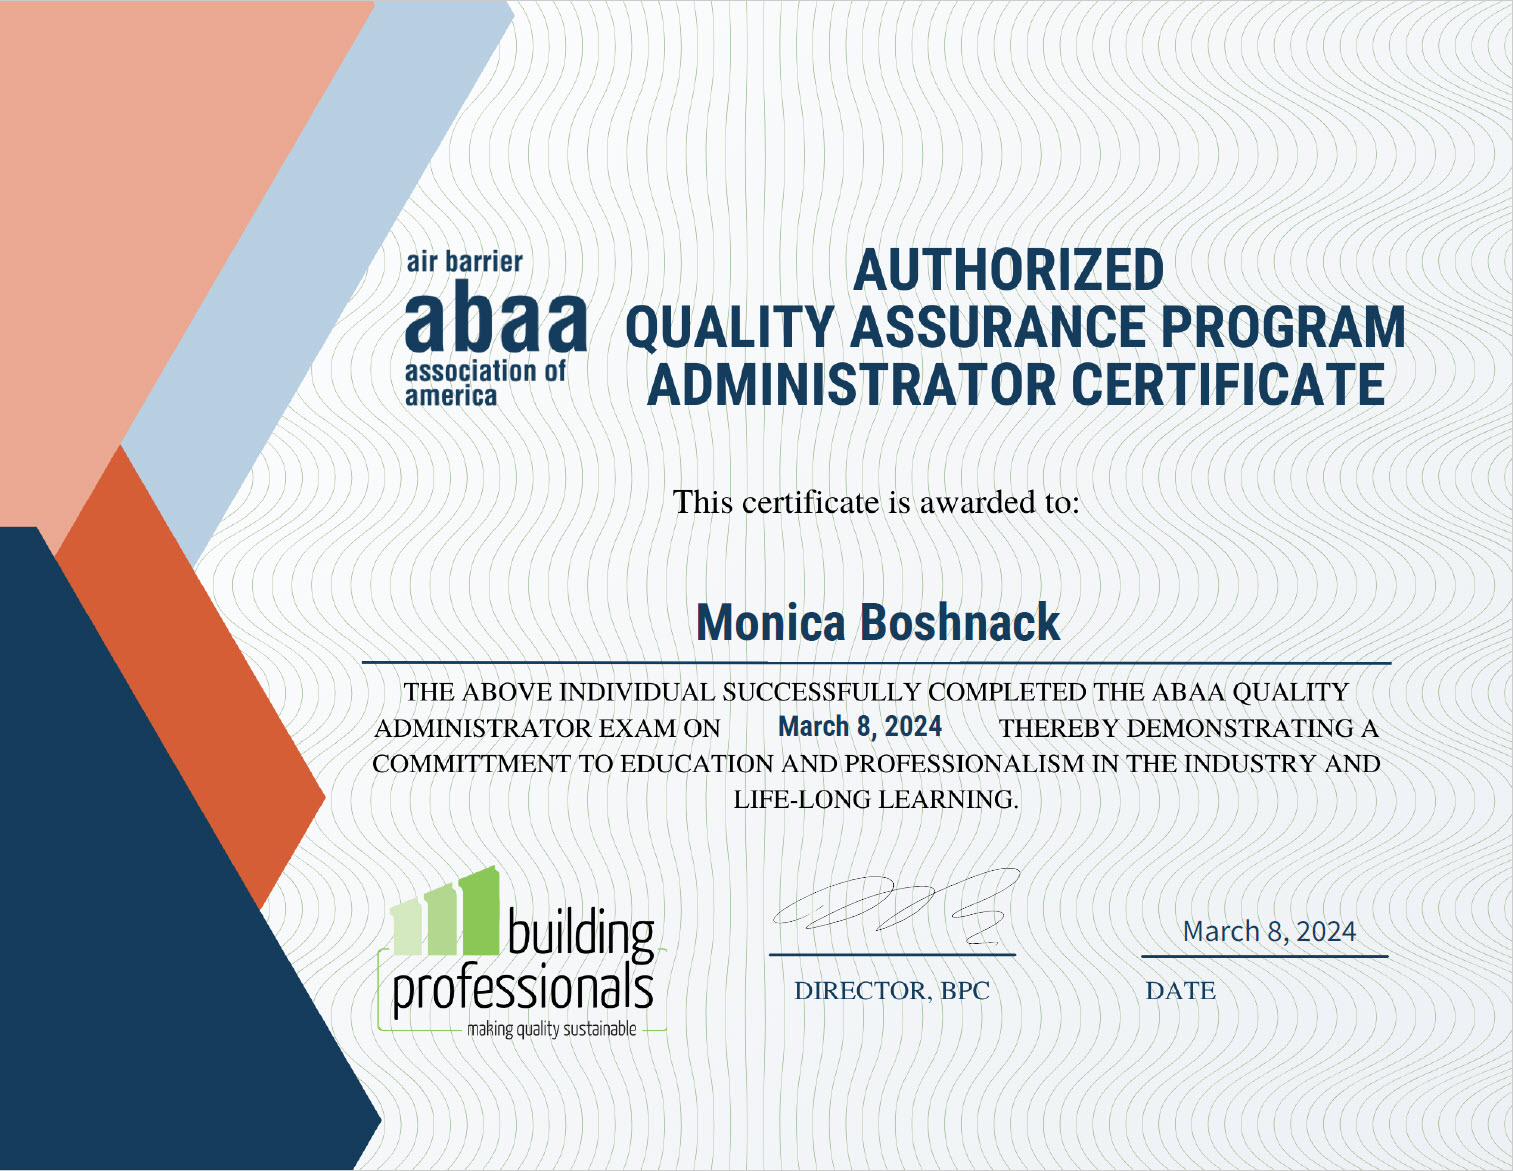 Air Barrier Association of America certification